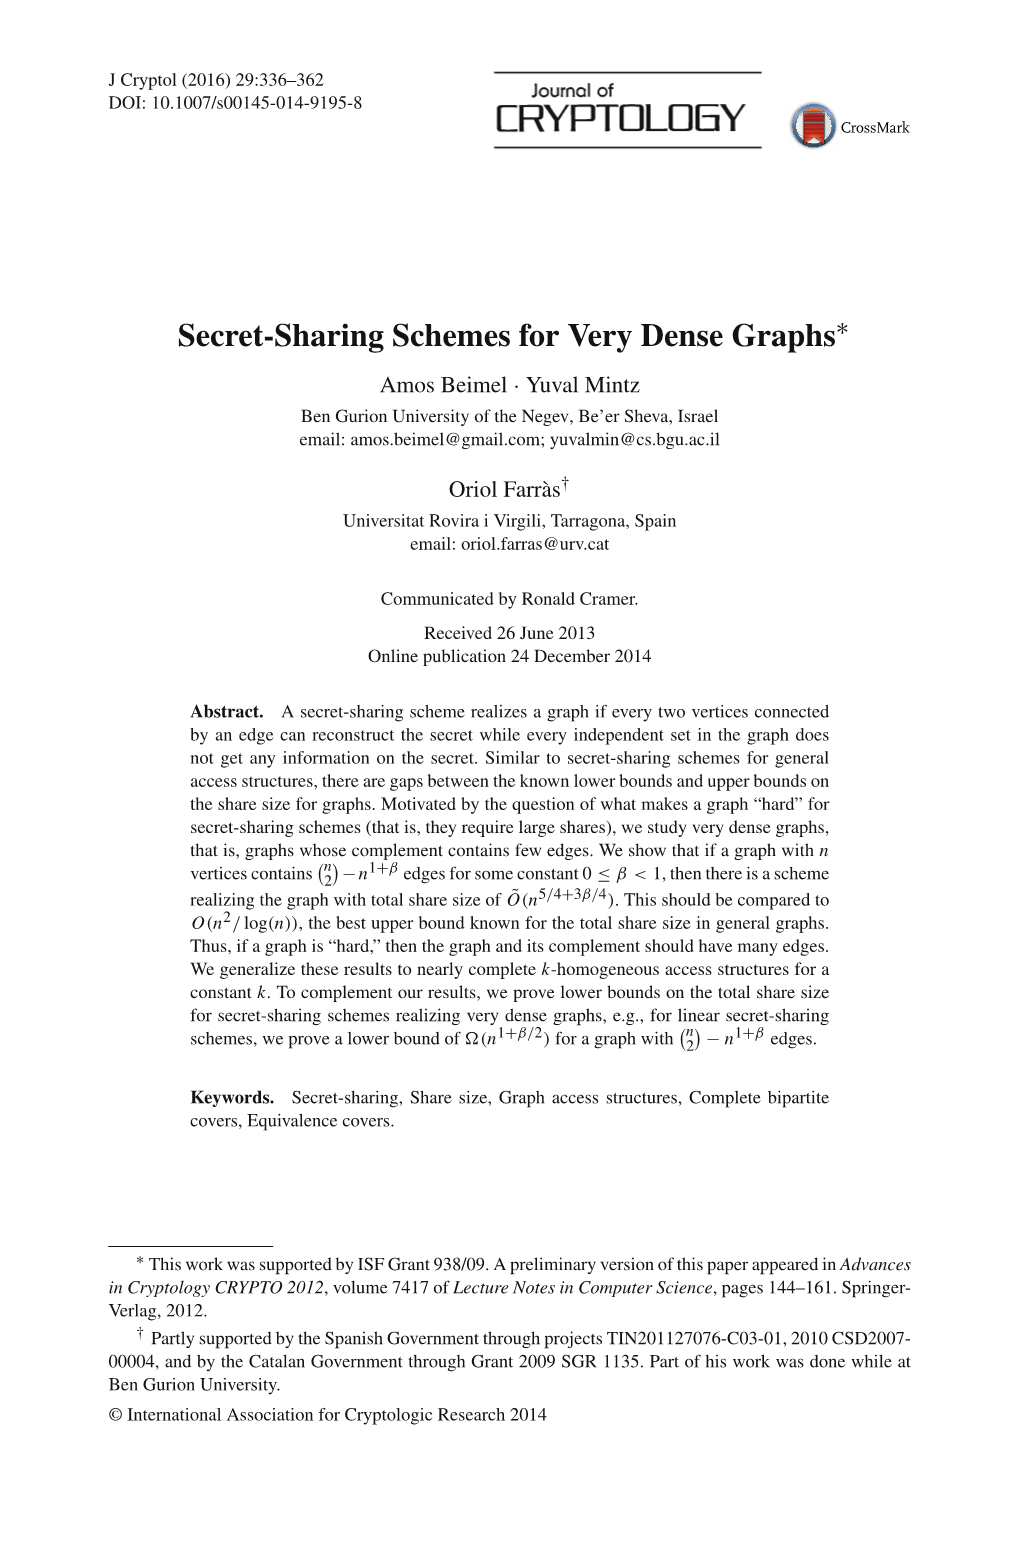 Secret-Sharing Schemes for Very Dense Graphs